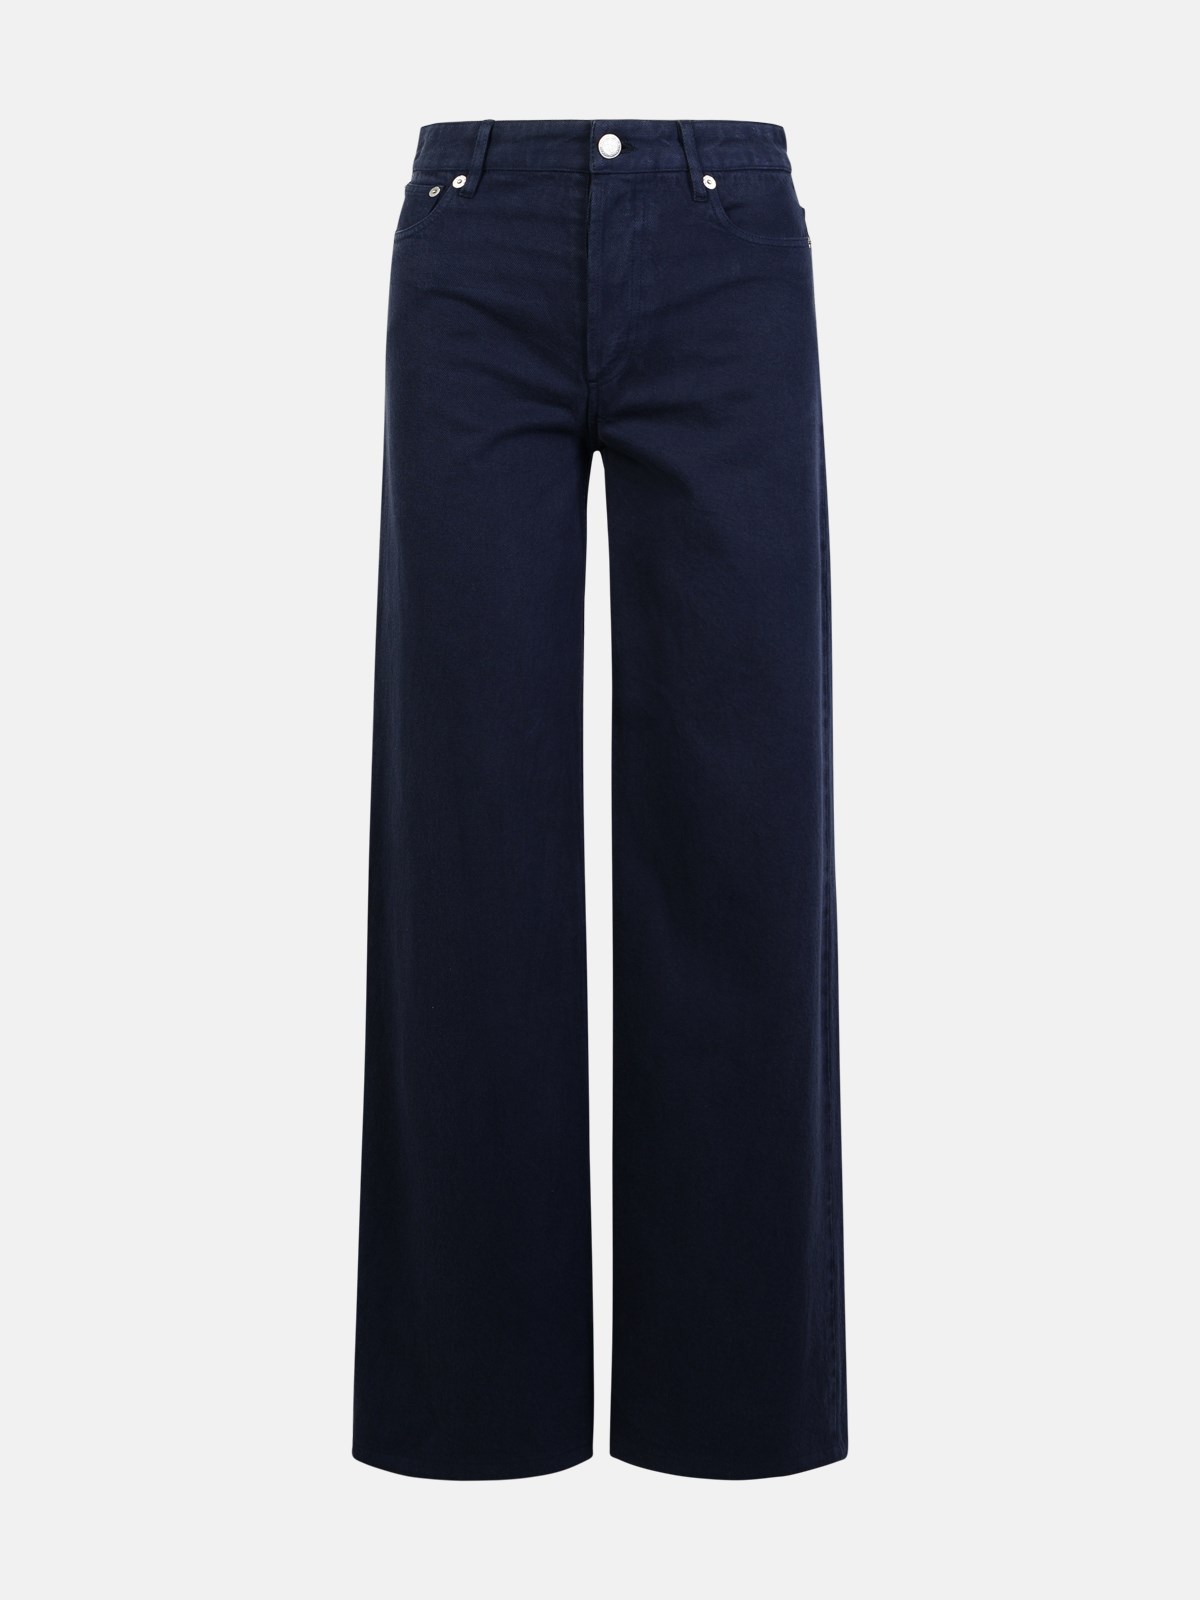 Shop Apc 'elisabeth' Navy Denim Jeans